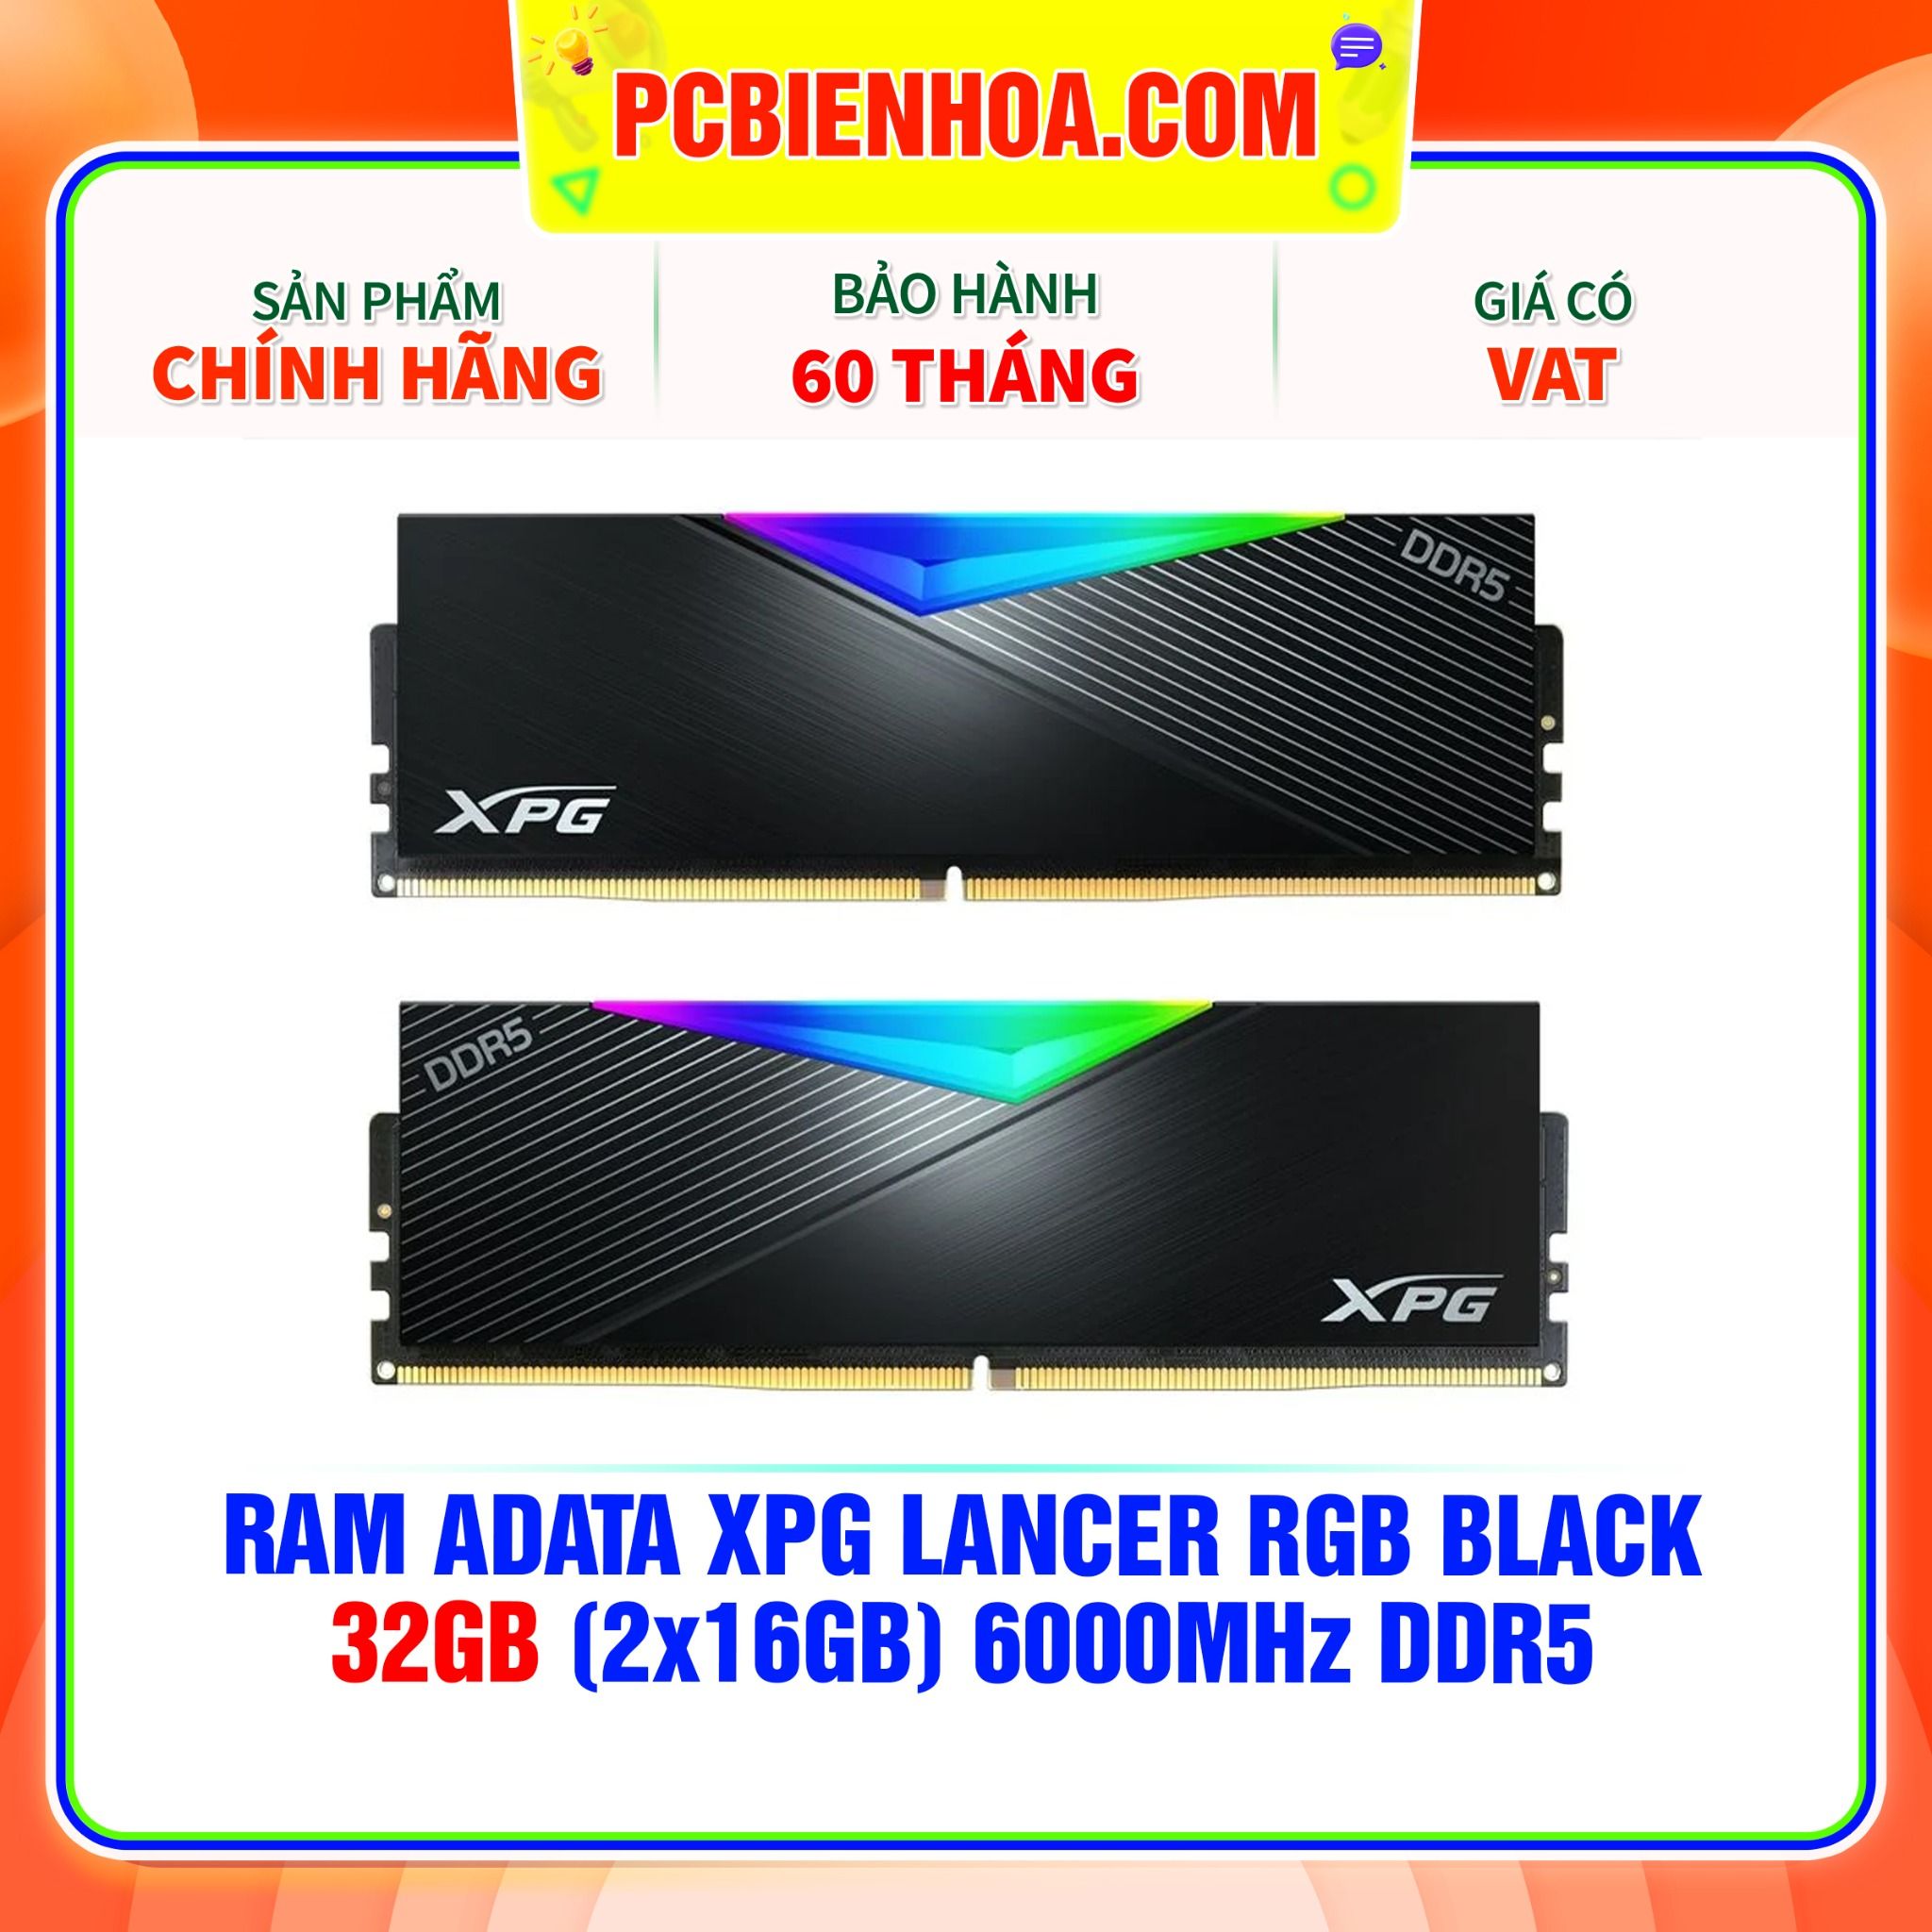  RAM ADATA XPG LANCER RGB BLACK - 32GB (2x16GB) 6000MHz DDR5 